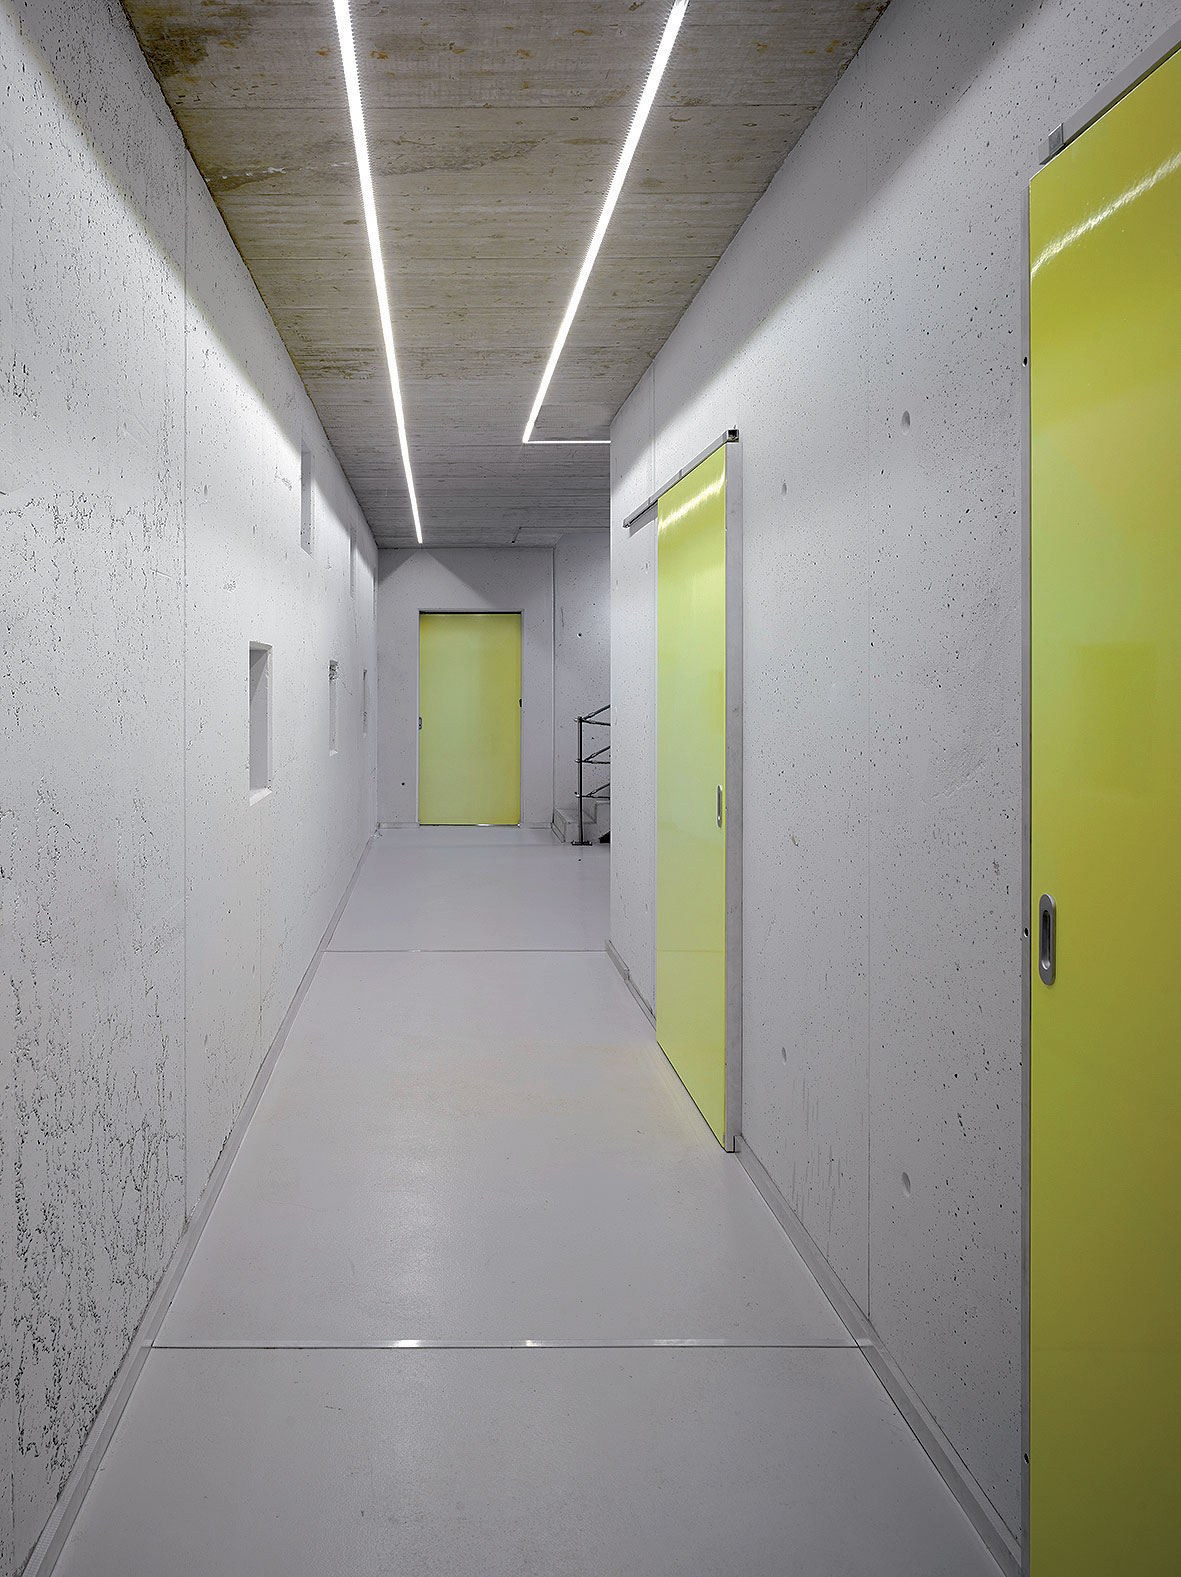 Kontrast betonu a výrazné barvy v interiéru